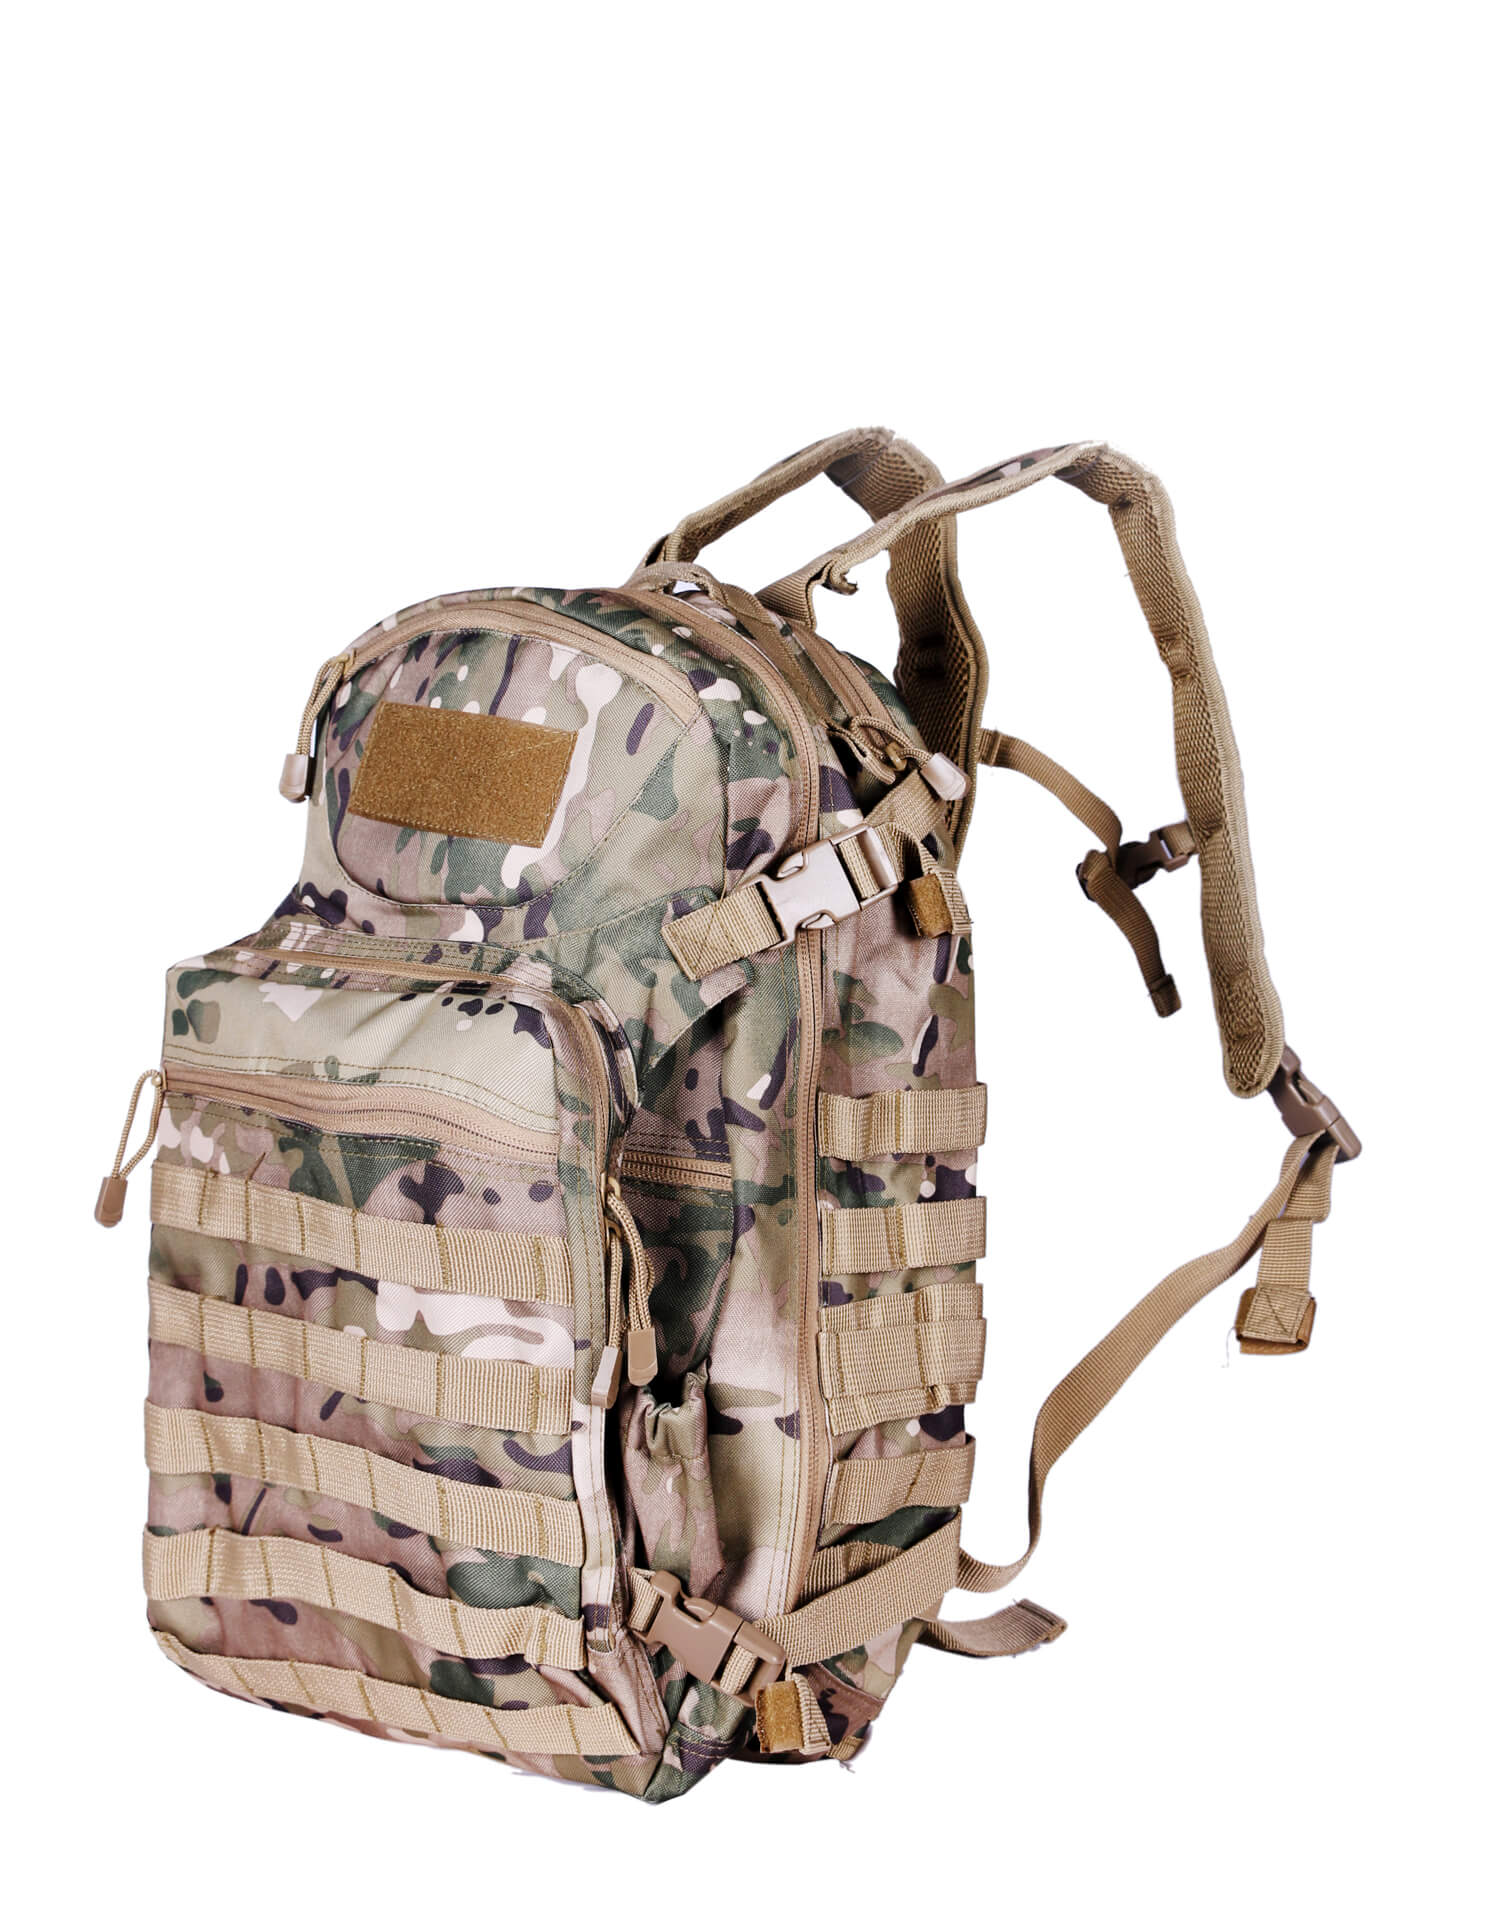 Outdoor Venture Tactical Sports Military Camping Trekking Bag